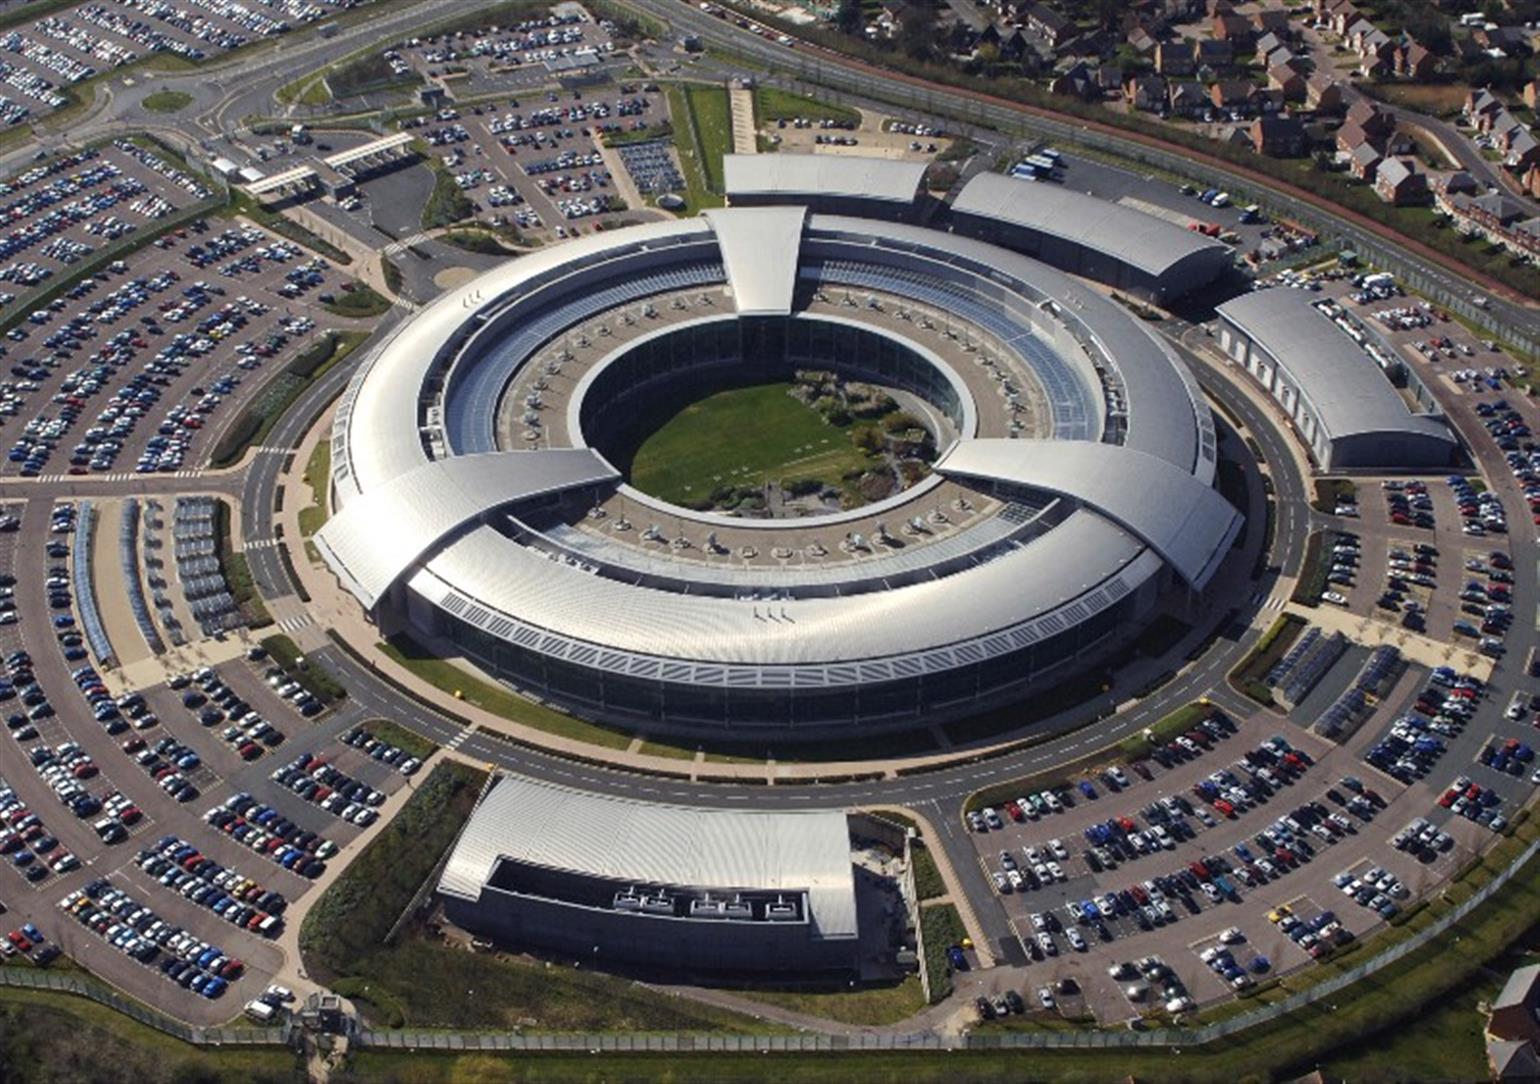 La sede del GCHQ, l'agenzia di intelligence britannica. Fonte: defenceimages/Flickr